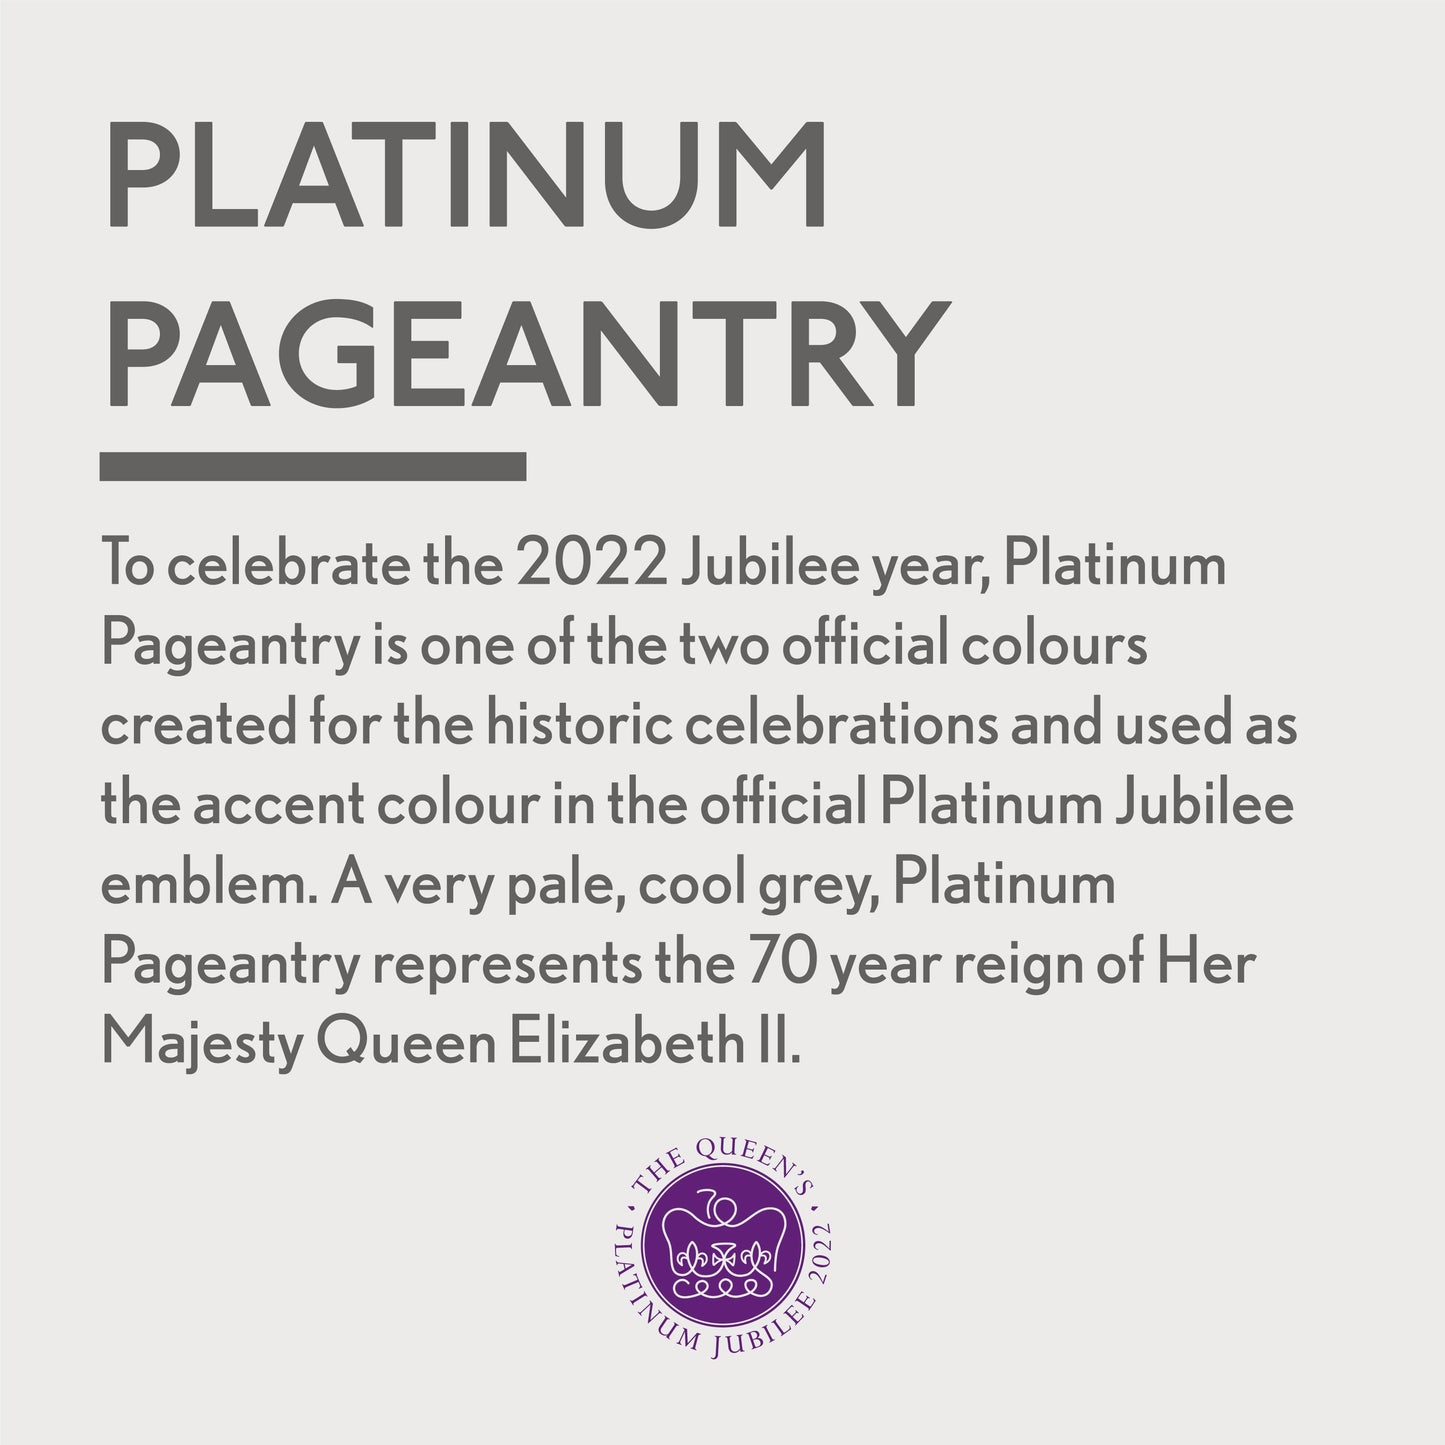 Platinum Pageantry